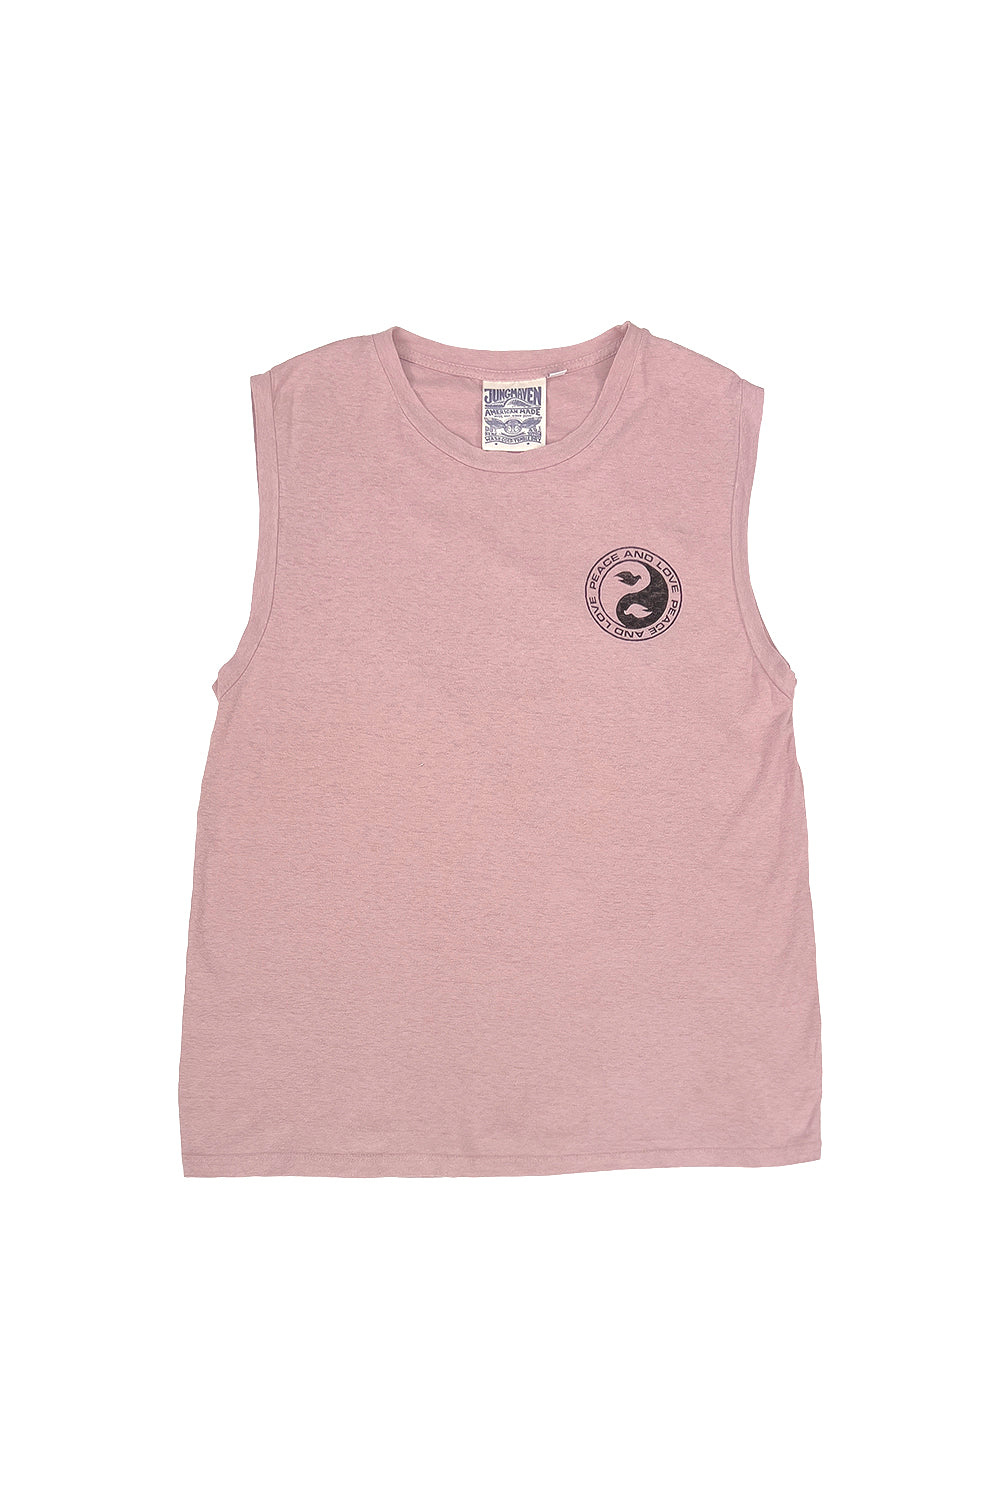 Peace & Love Malibu Muscle Tee | Jungmaven Hemp Clothing & Accessories / Color: Rose Quartz